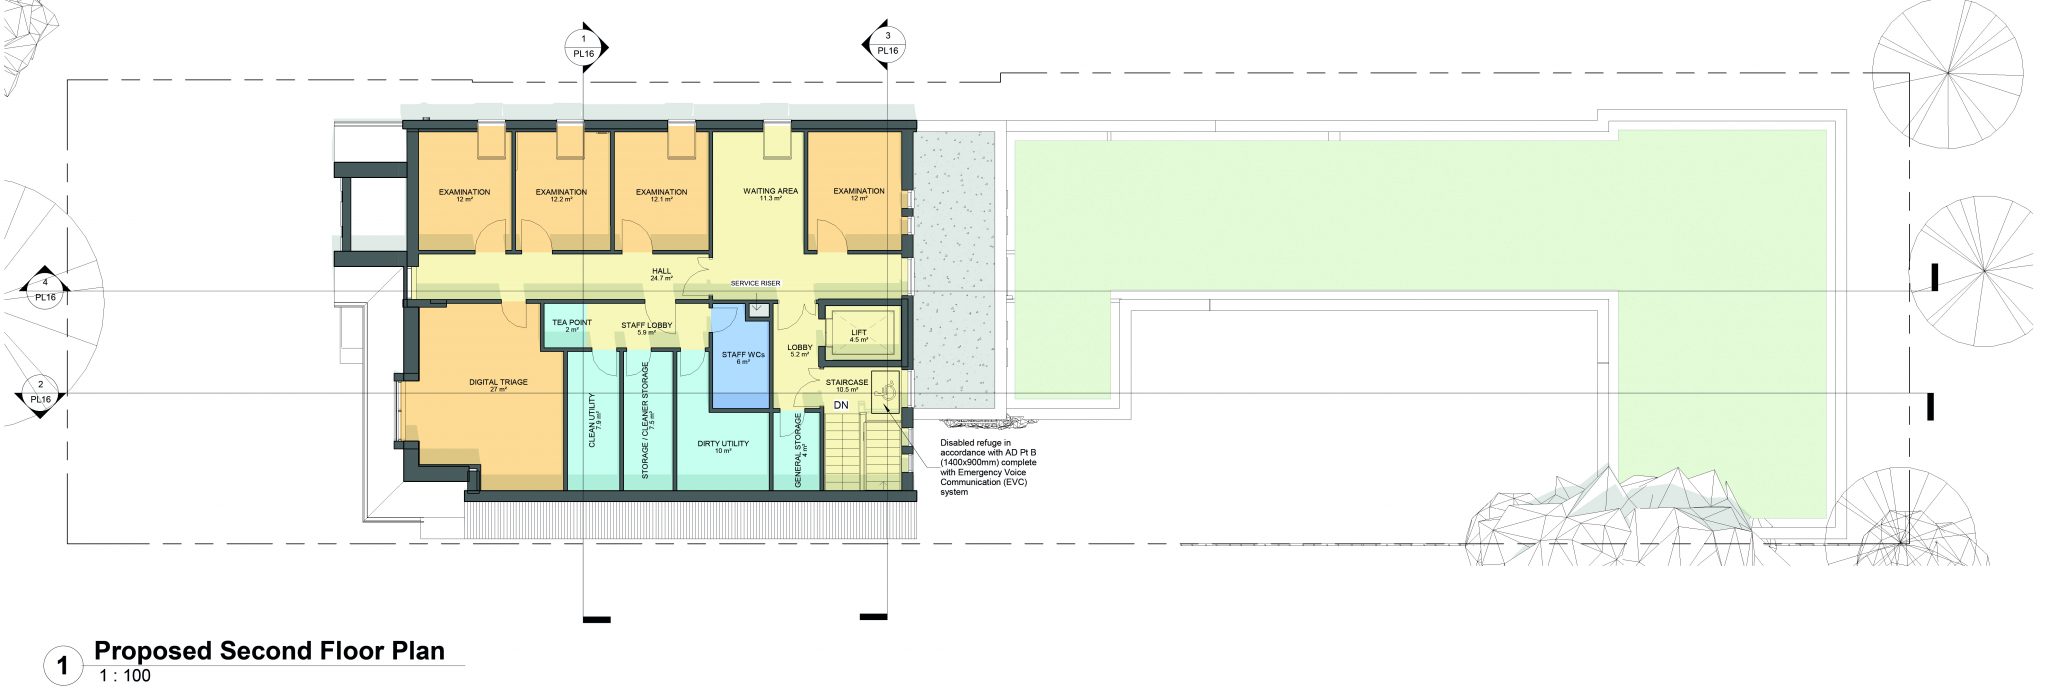 Proposed-Second-Floor-Plan